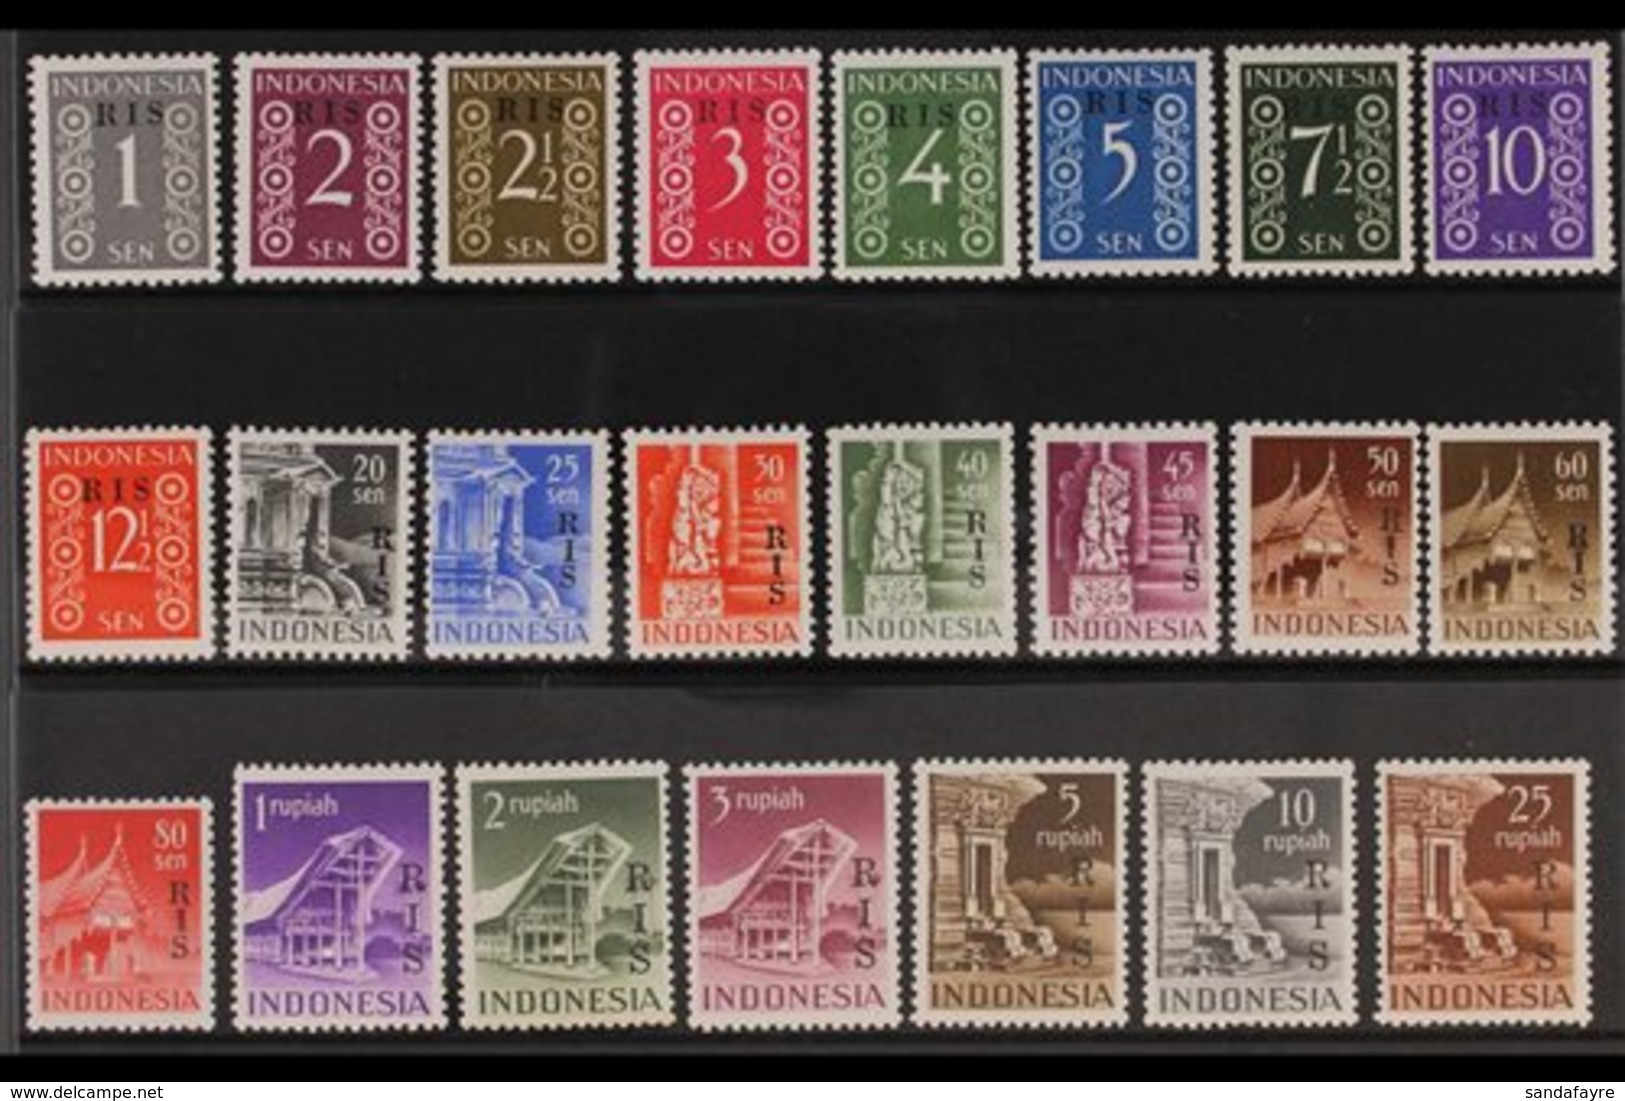 1950  Netherland Indies "R I S" Overprinted Complete Set, SG 579/601, Scott 335/58, Never Hinged Mint (23 Stamps) For Mo - Indonesien